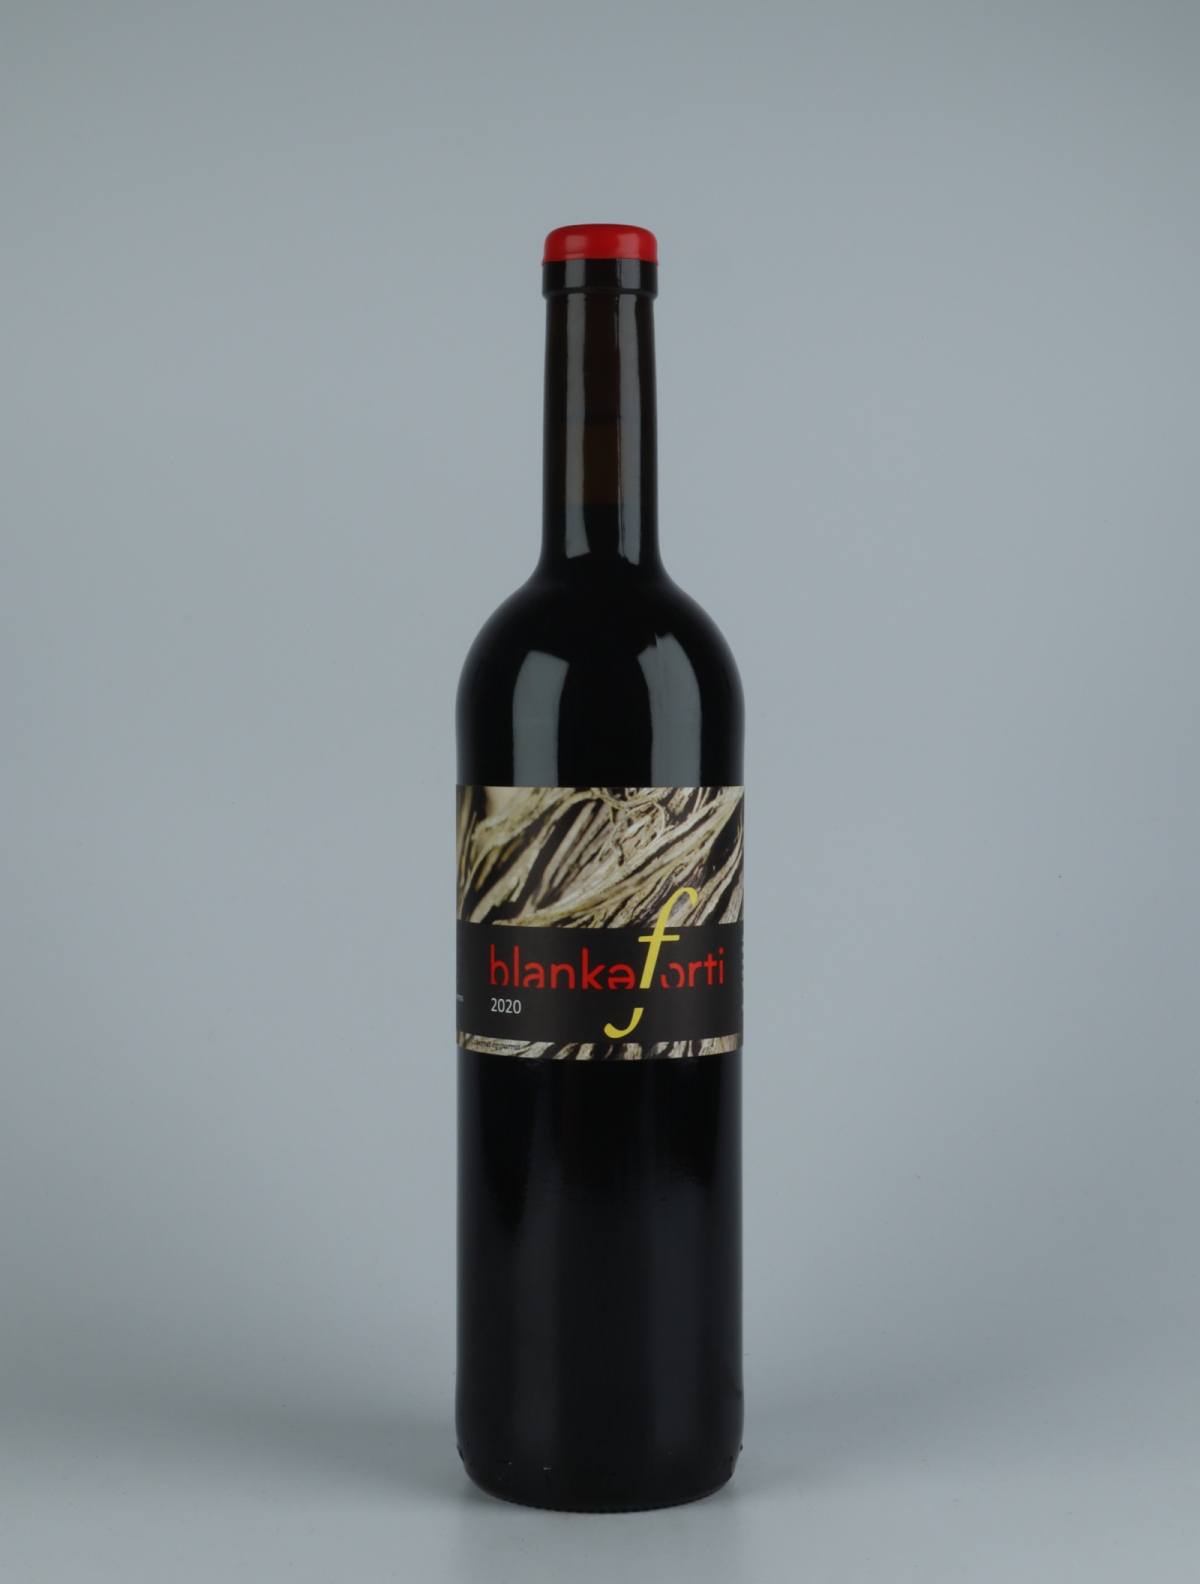 A bottle 2020 Blankaforti Red wine from , Catalonia in Spain